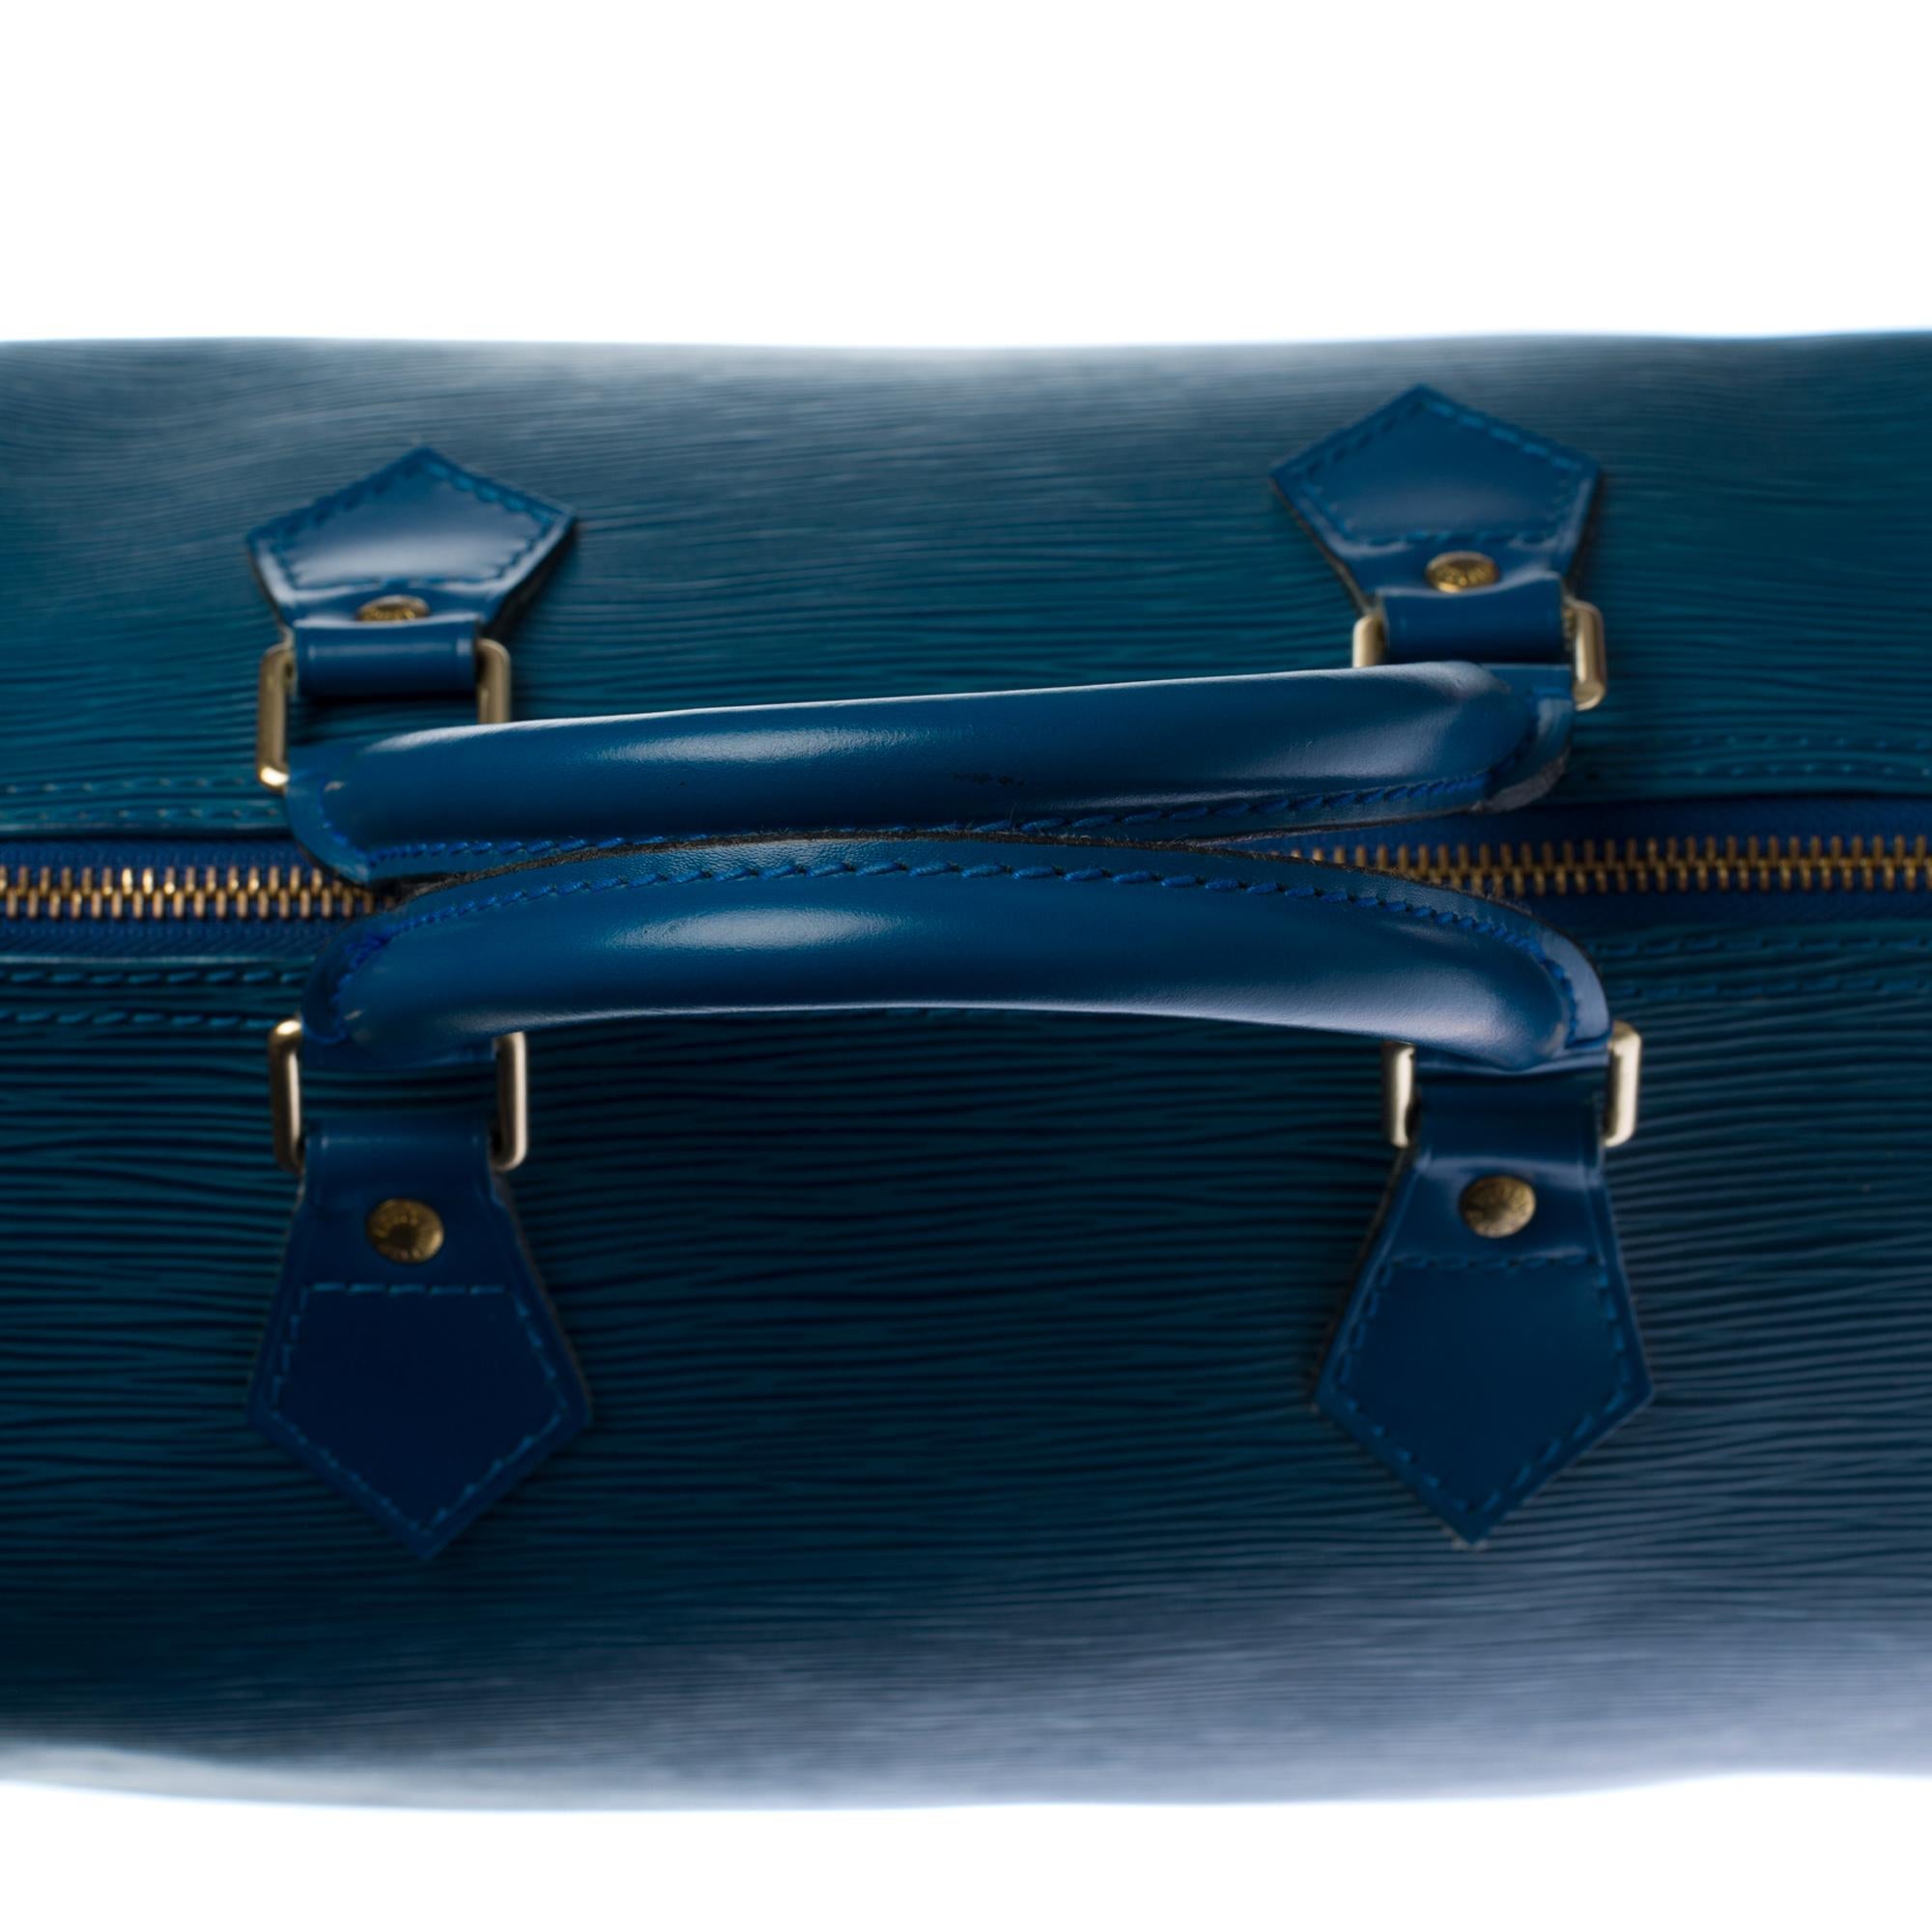 Louis Vuitton Speedy 30 handbag in blue épi leather and gold hardware 3